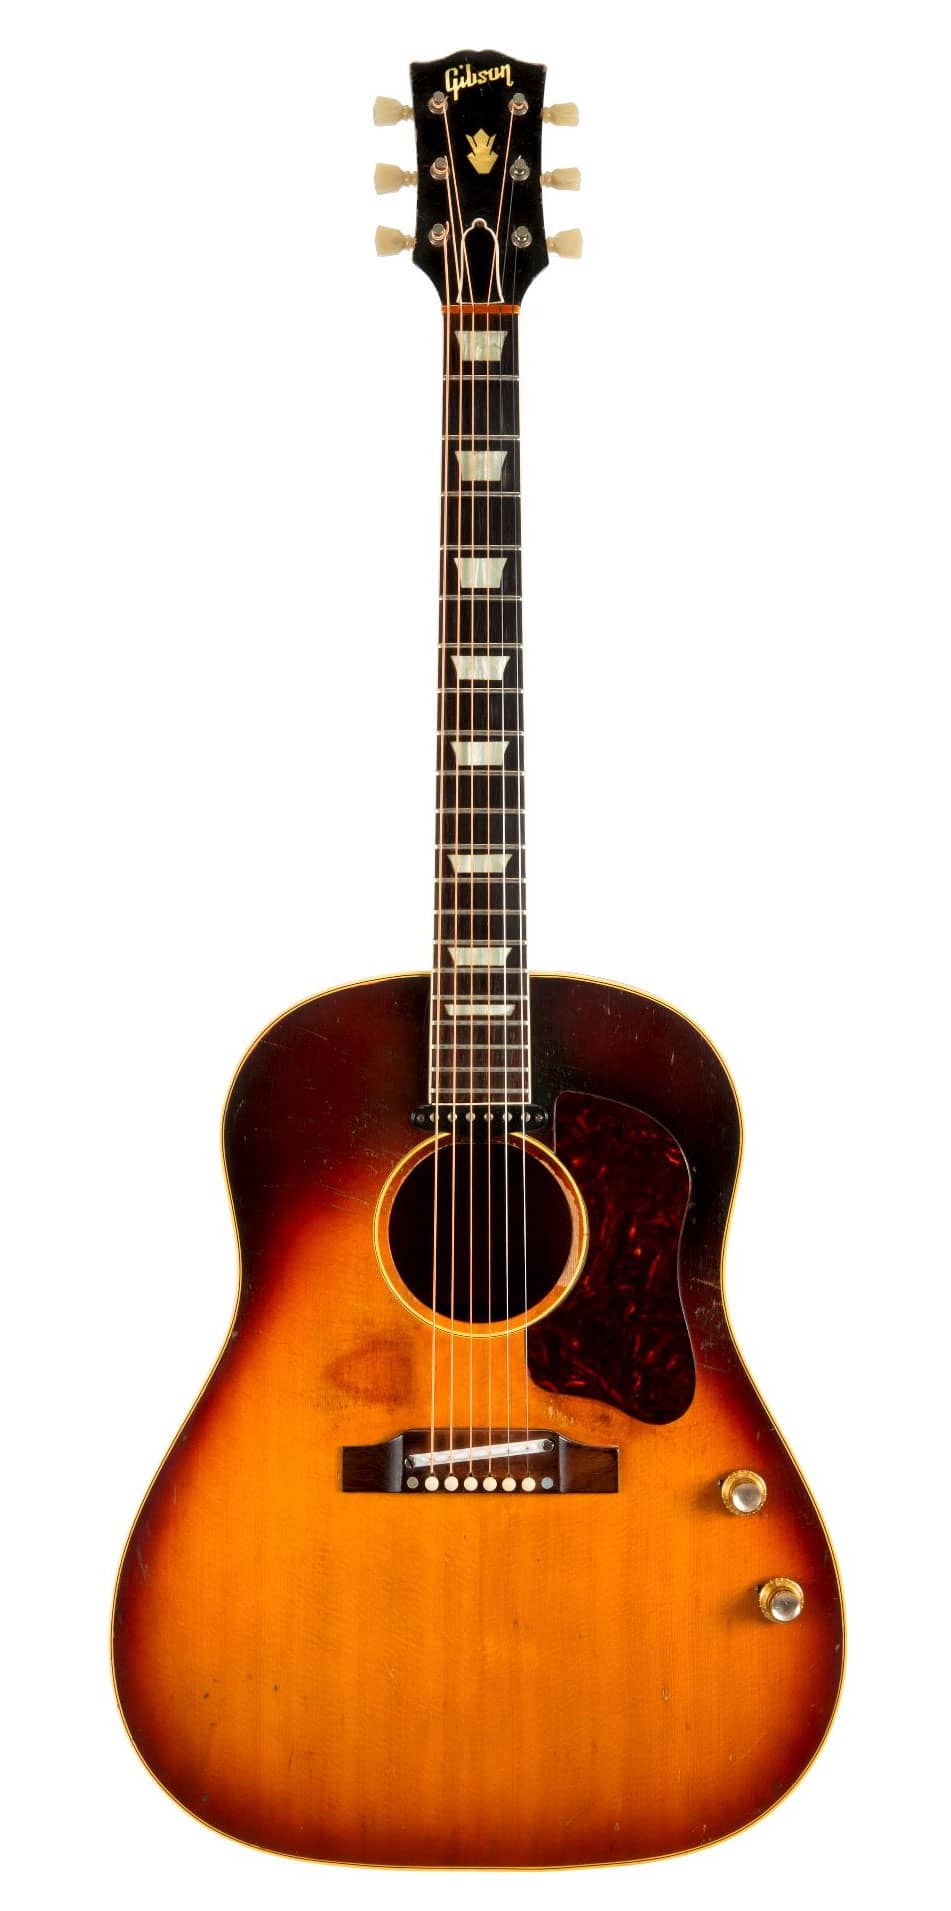 John Lennon “Give Peace a Chance” Mini Acoustic Guitar Replica - Fab Four